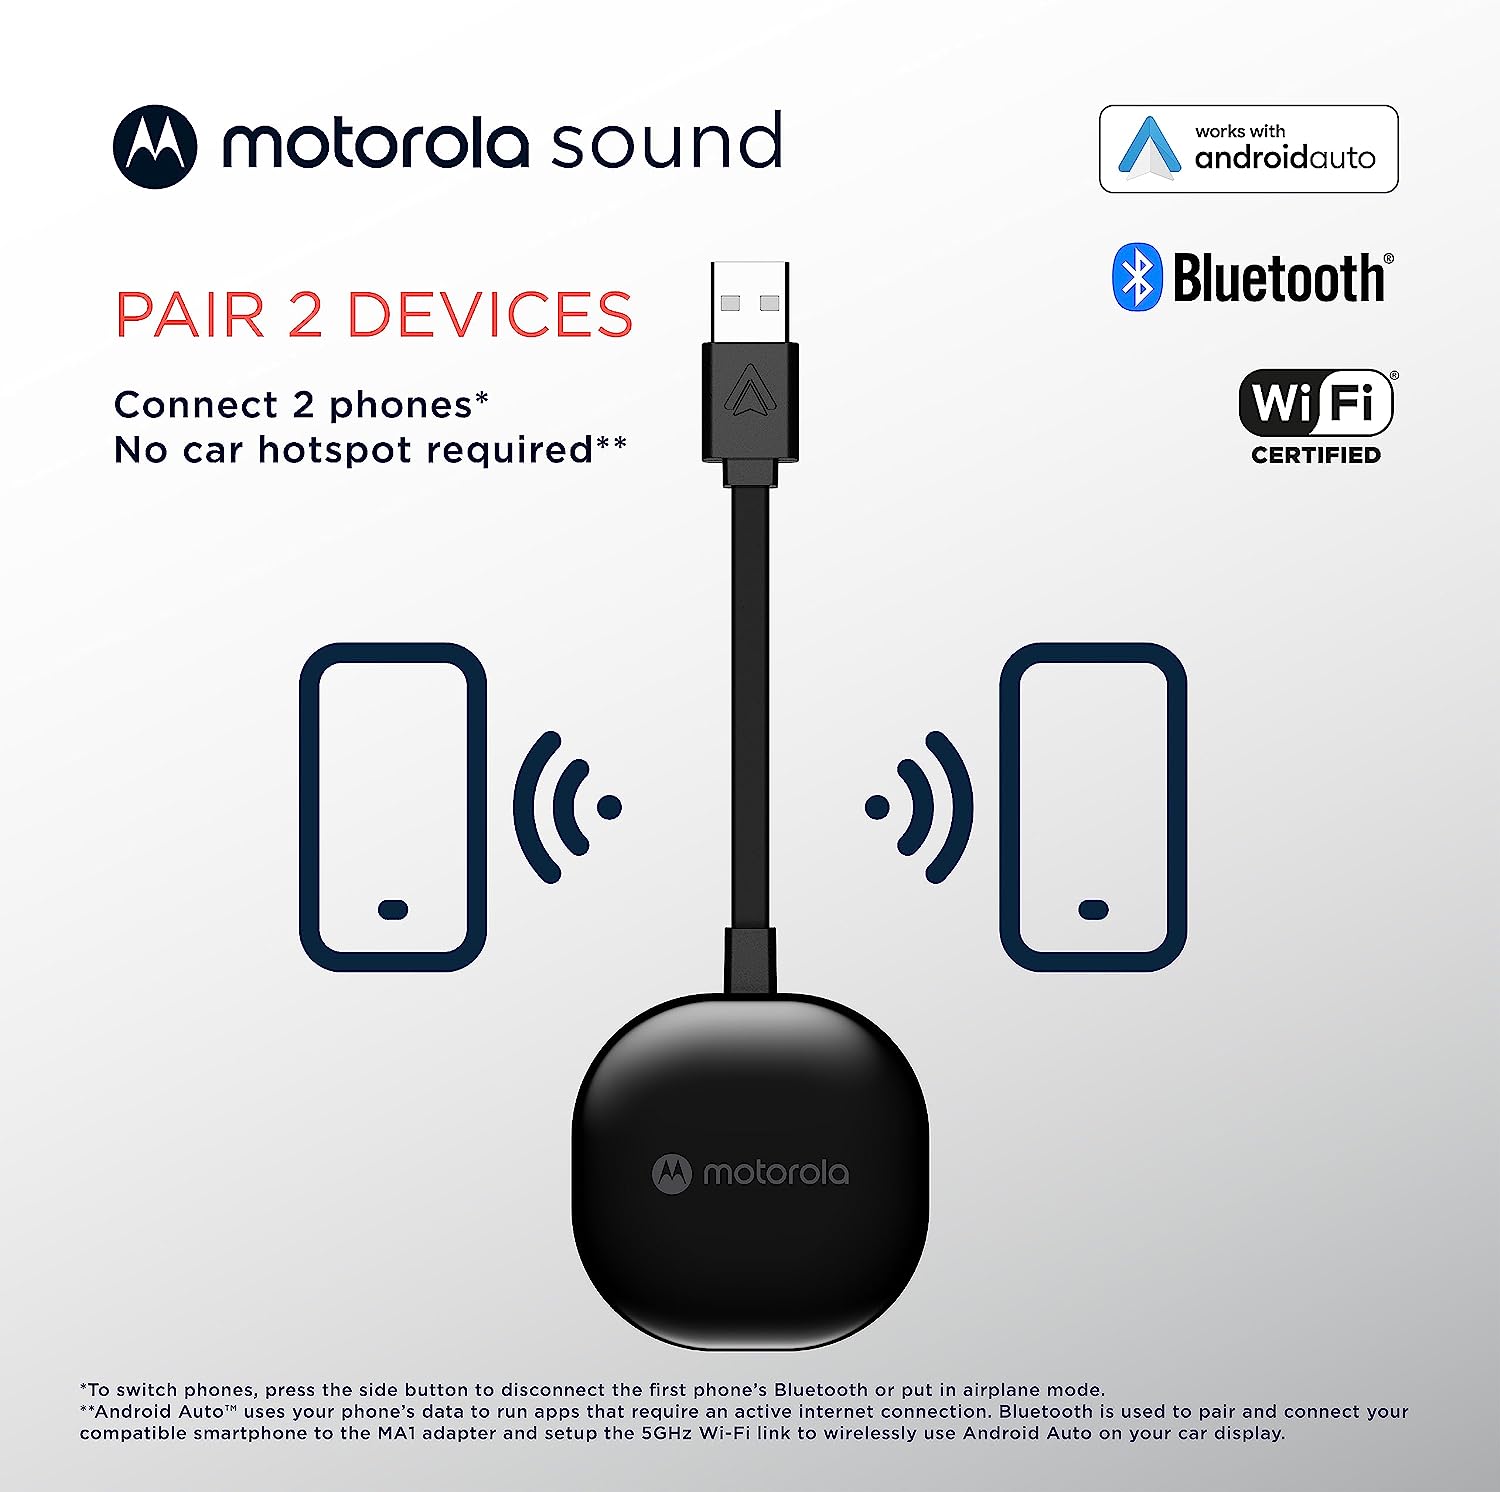 Buy Motorola MA1 Wireless Android Auto Car Adapter - Instant